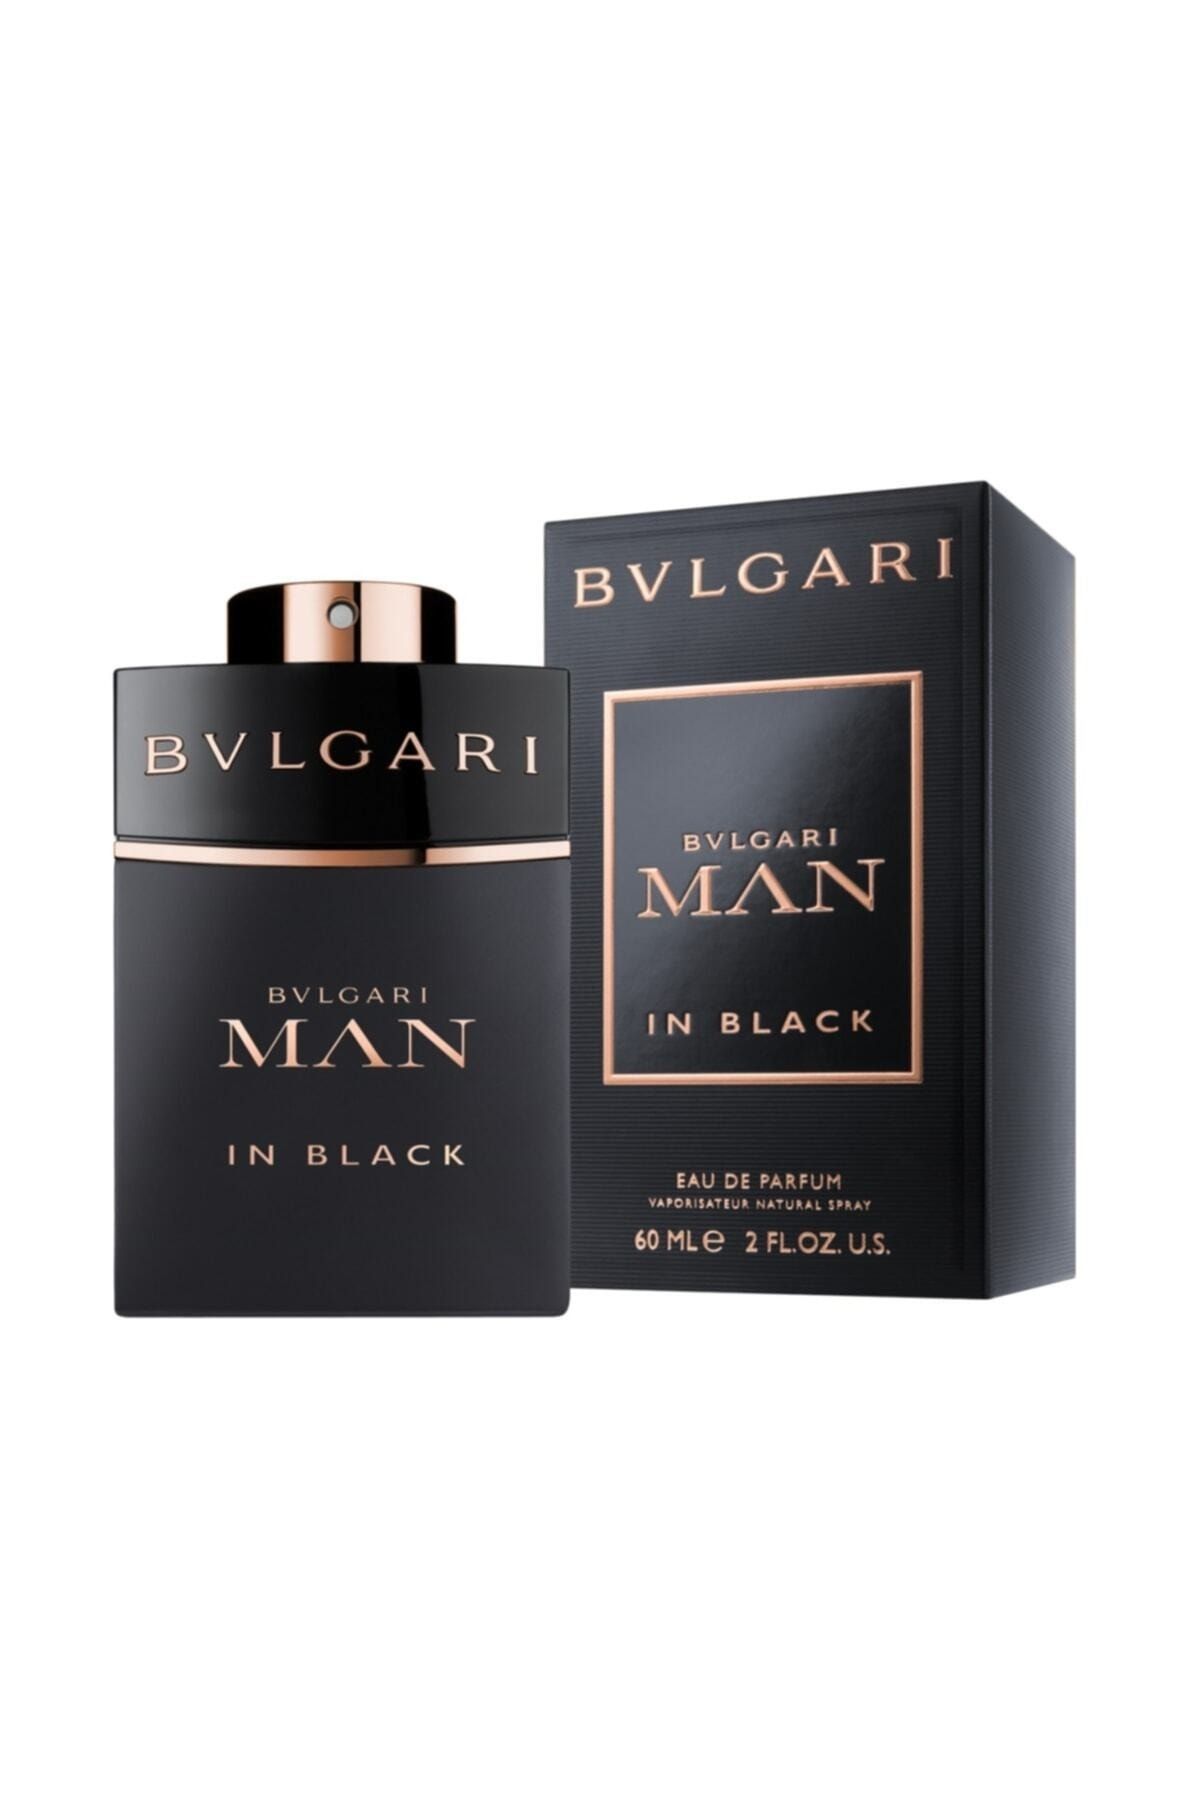 Bvlgari Man In Black 60 Ml Edp